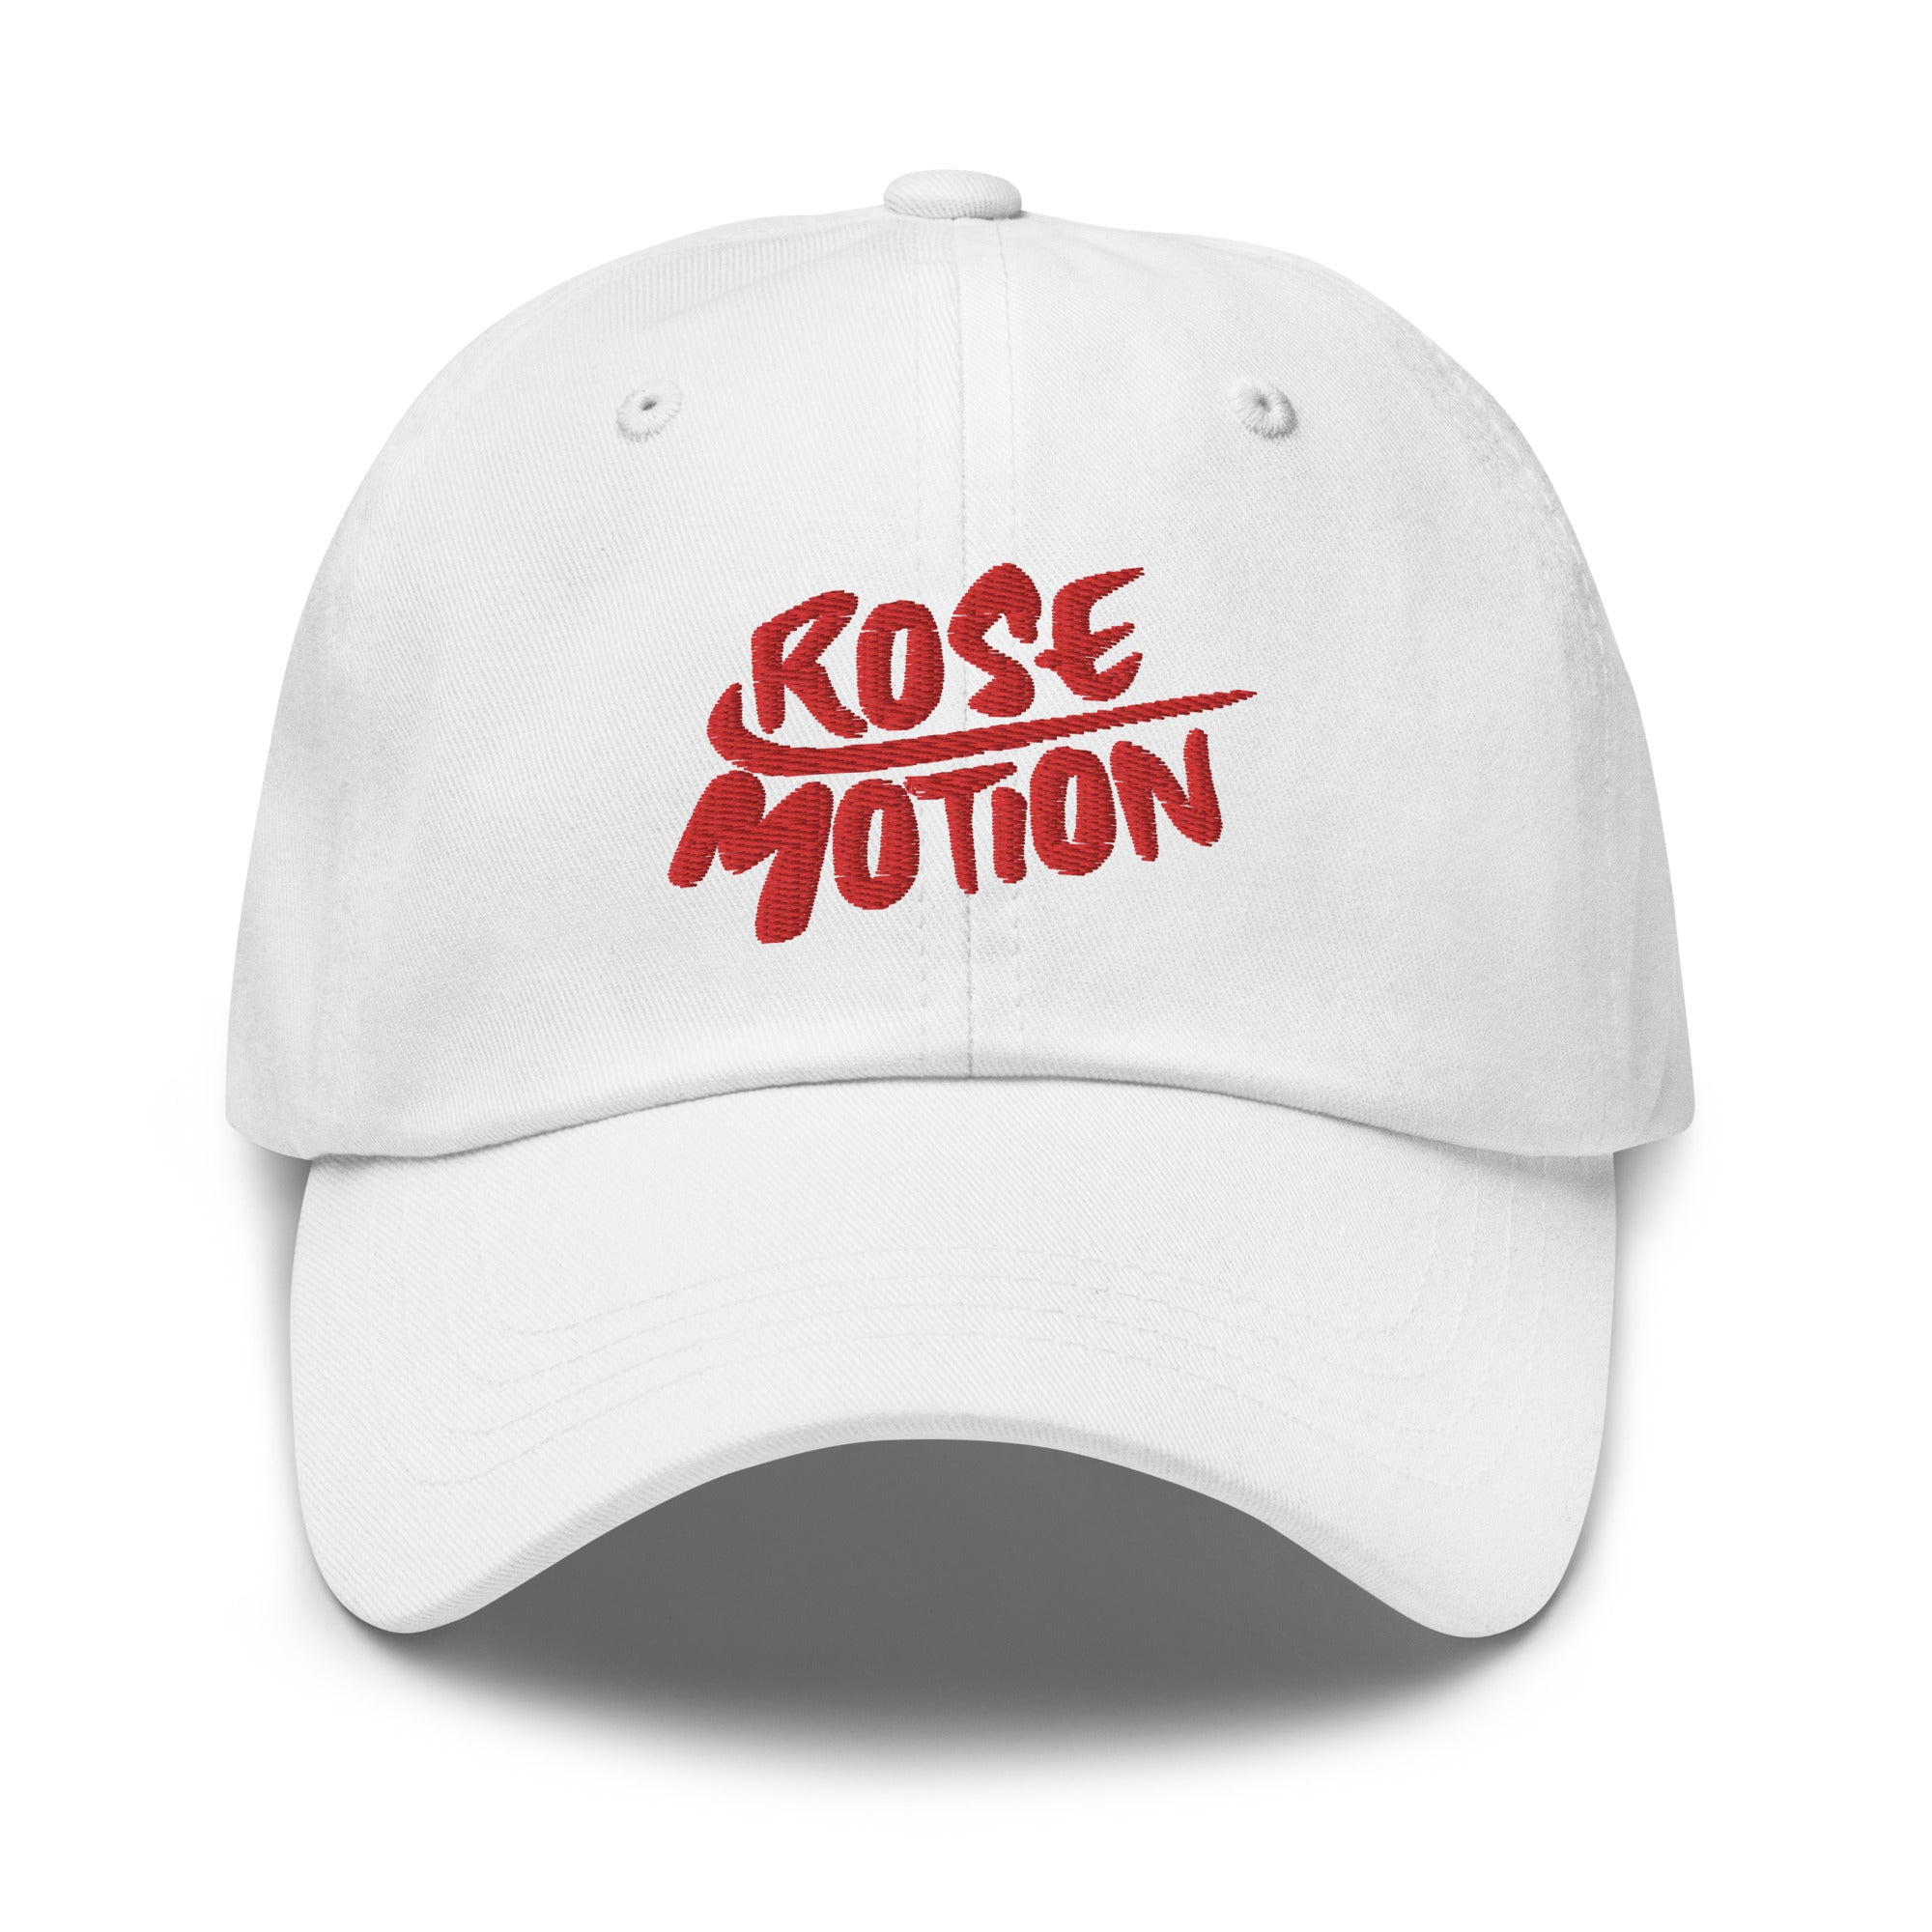 Rose Motion - Cap